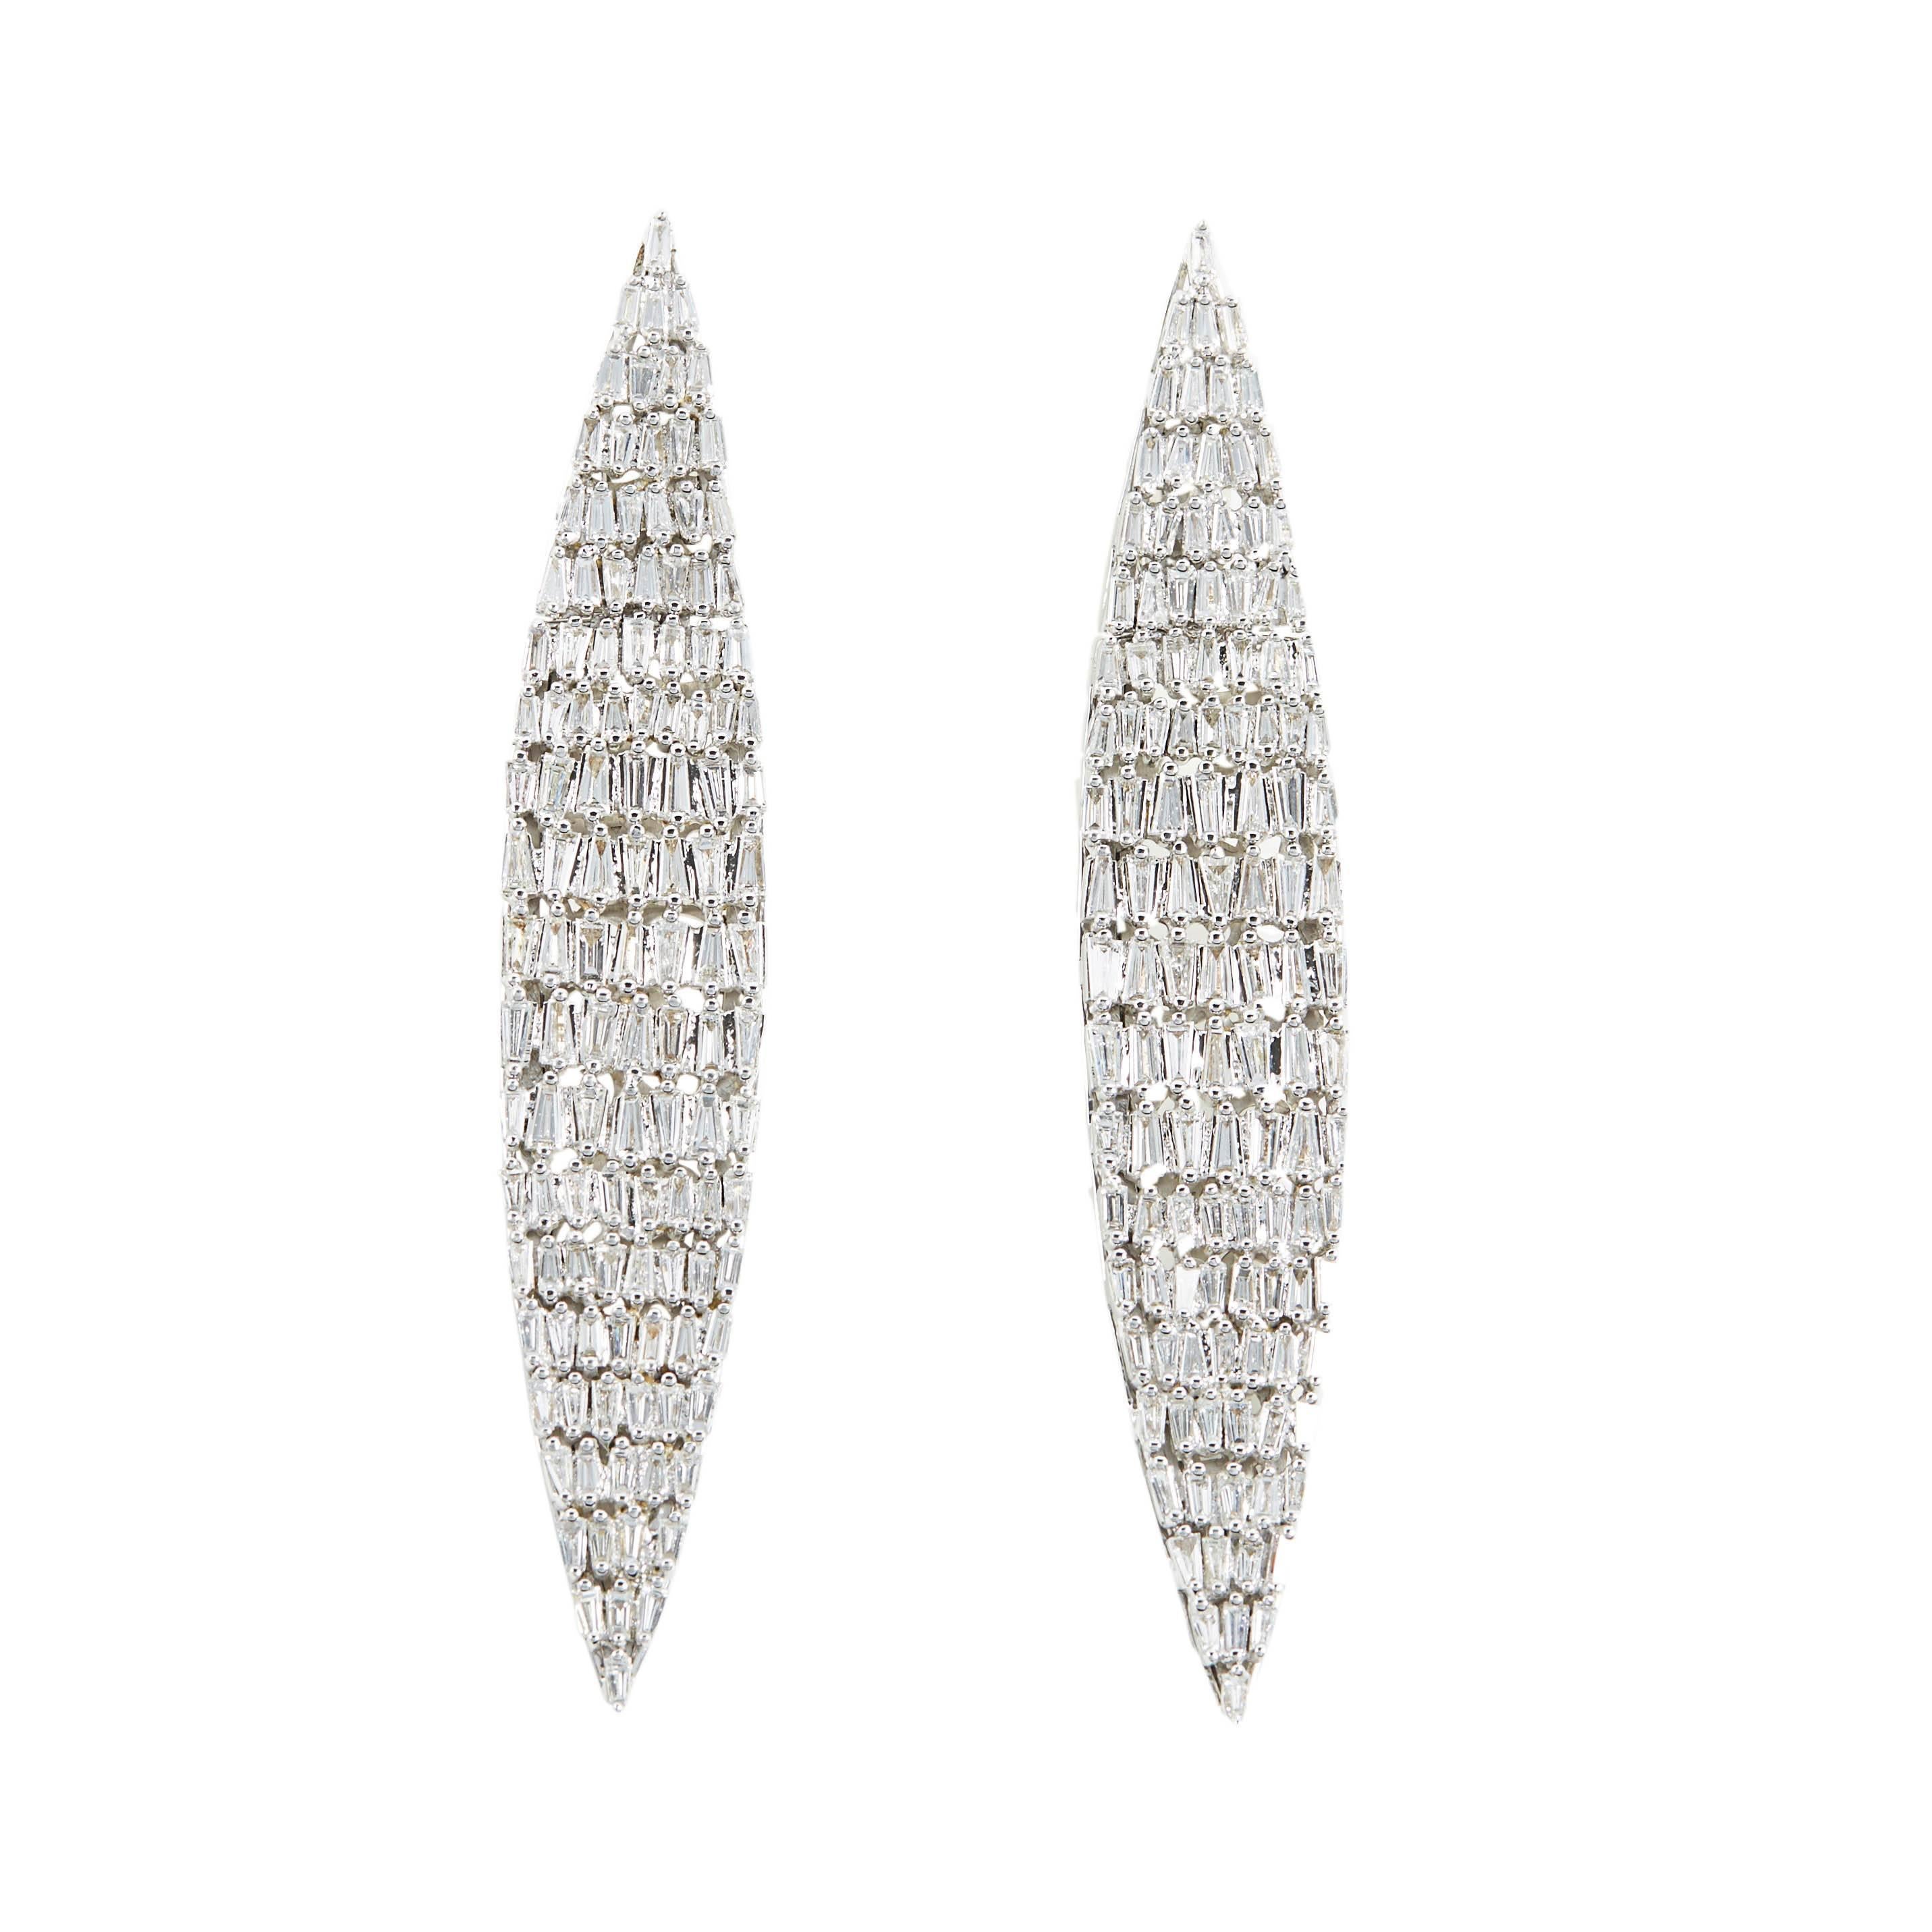 SAM SAAb 18k white gold Baguette Spear Earrings with 9.54ct of white diamonds.